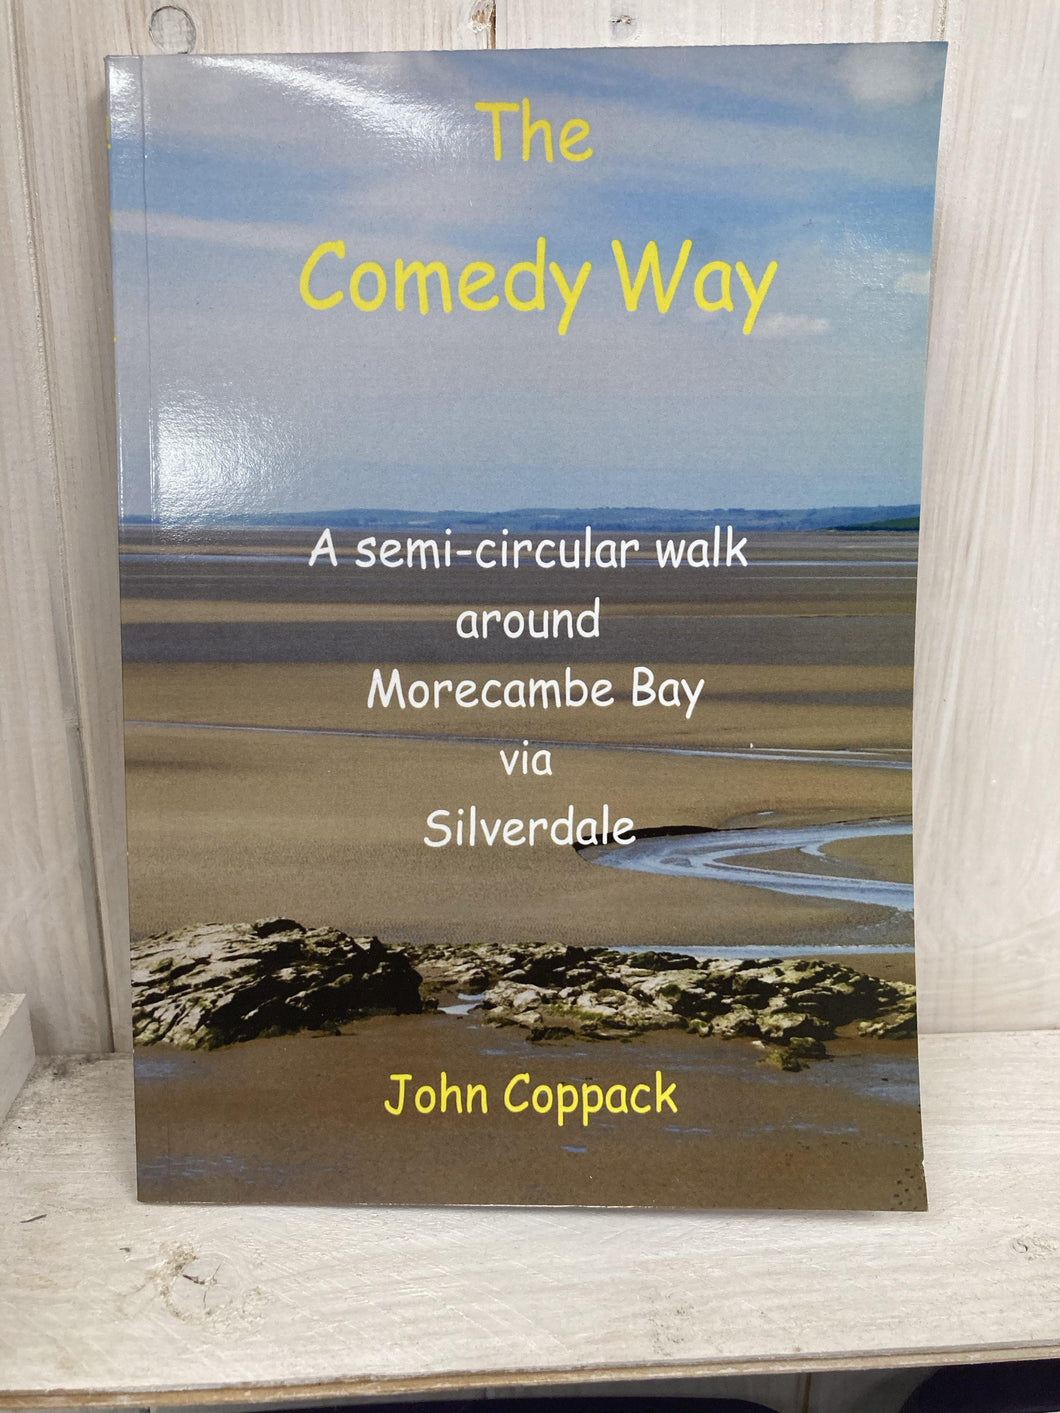 Comedy Way Walking Book - A semi-circular walk around Morecambe Bay - The Coast Office